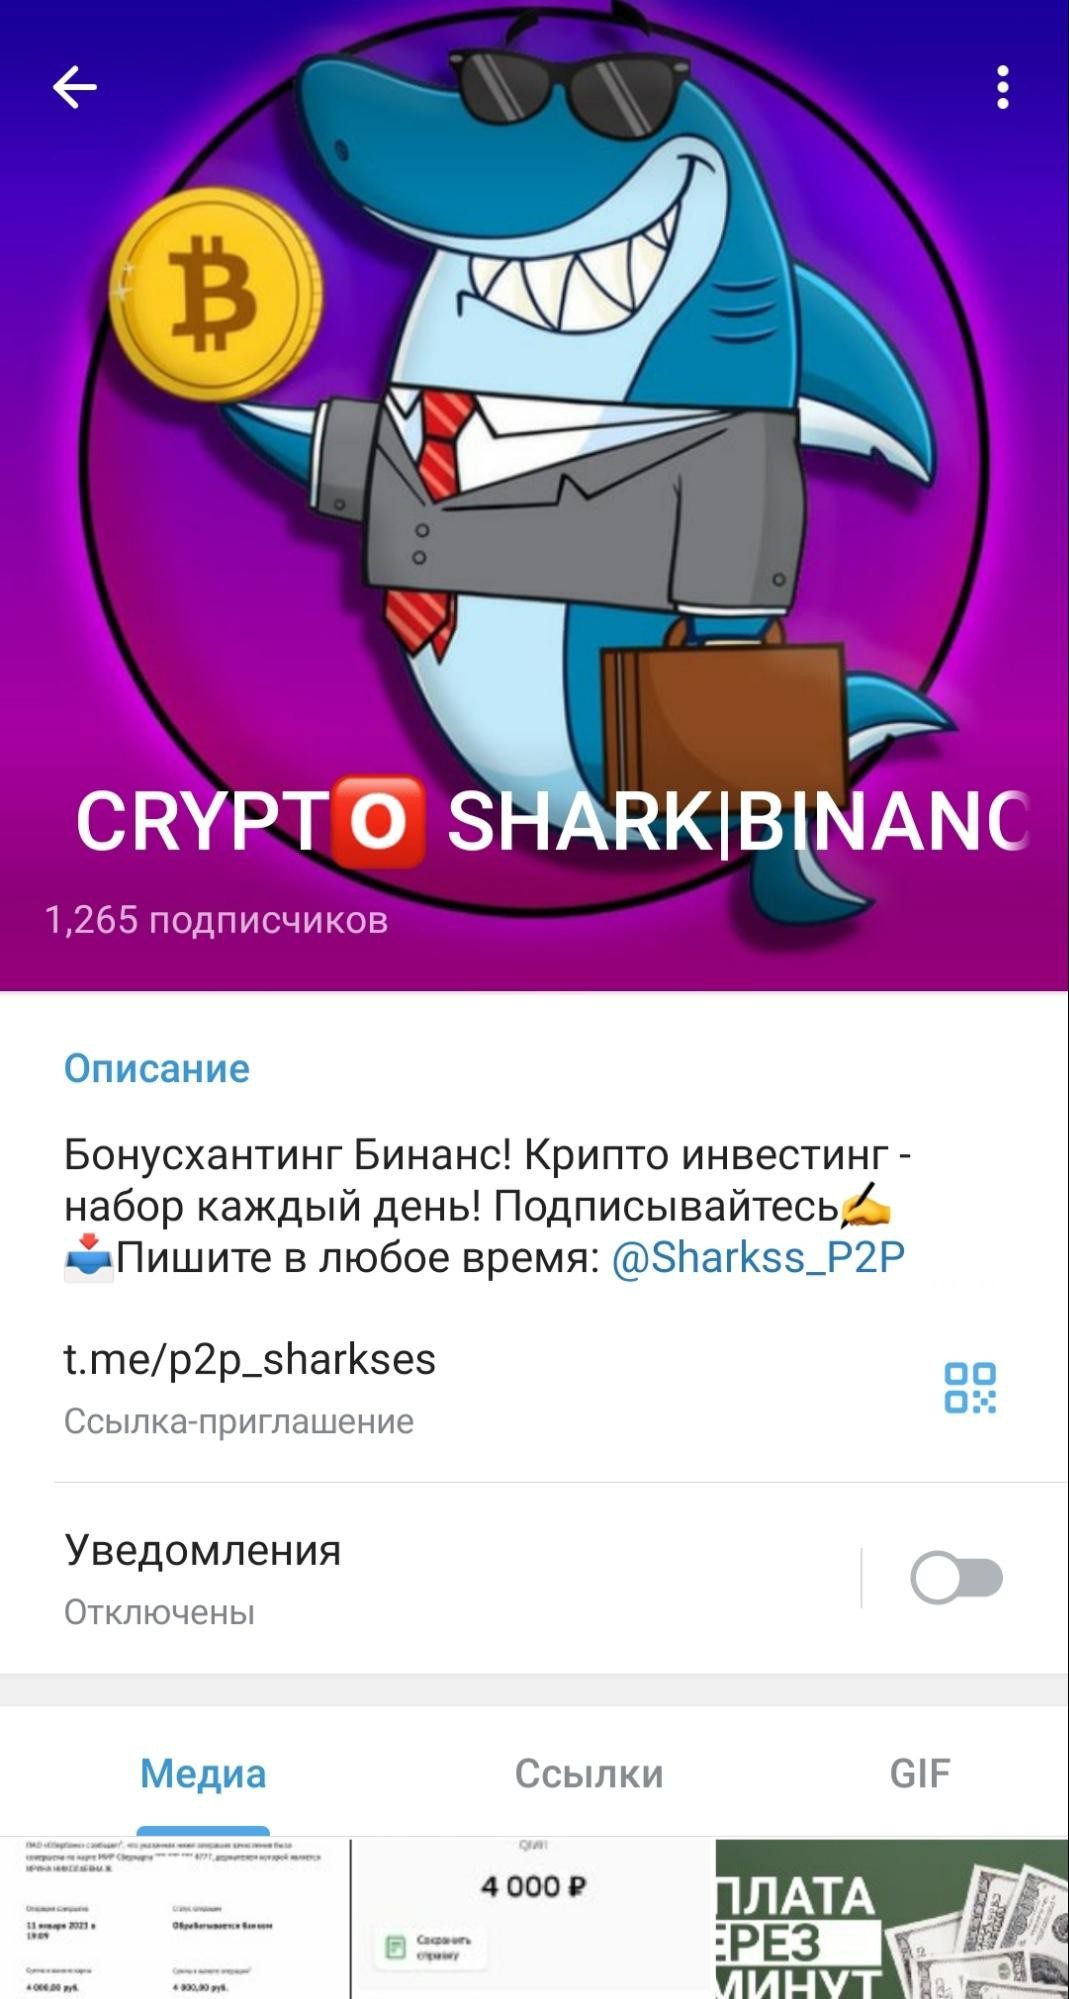 CryptoShark Binance телеграм